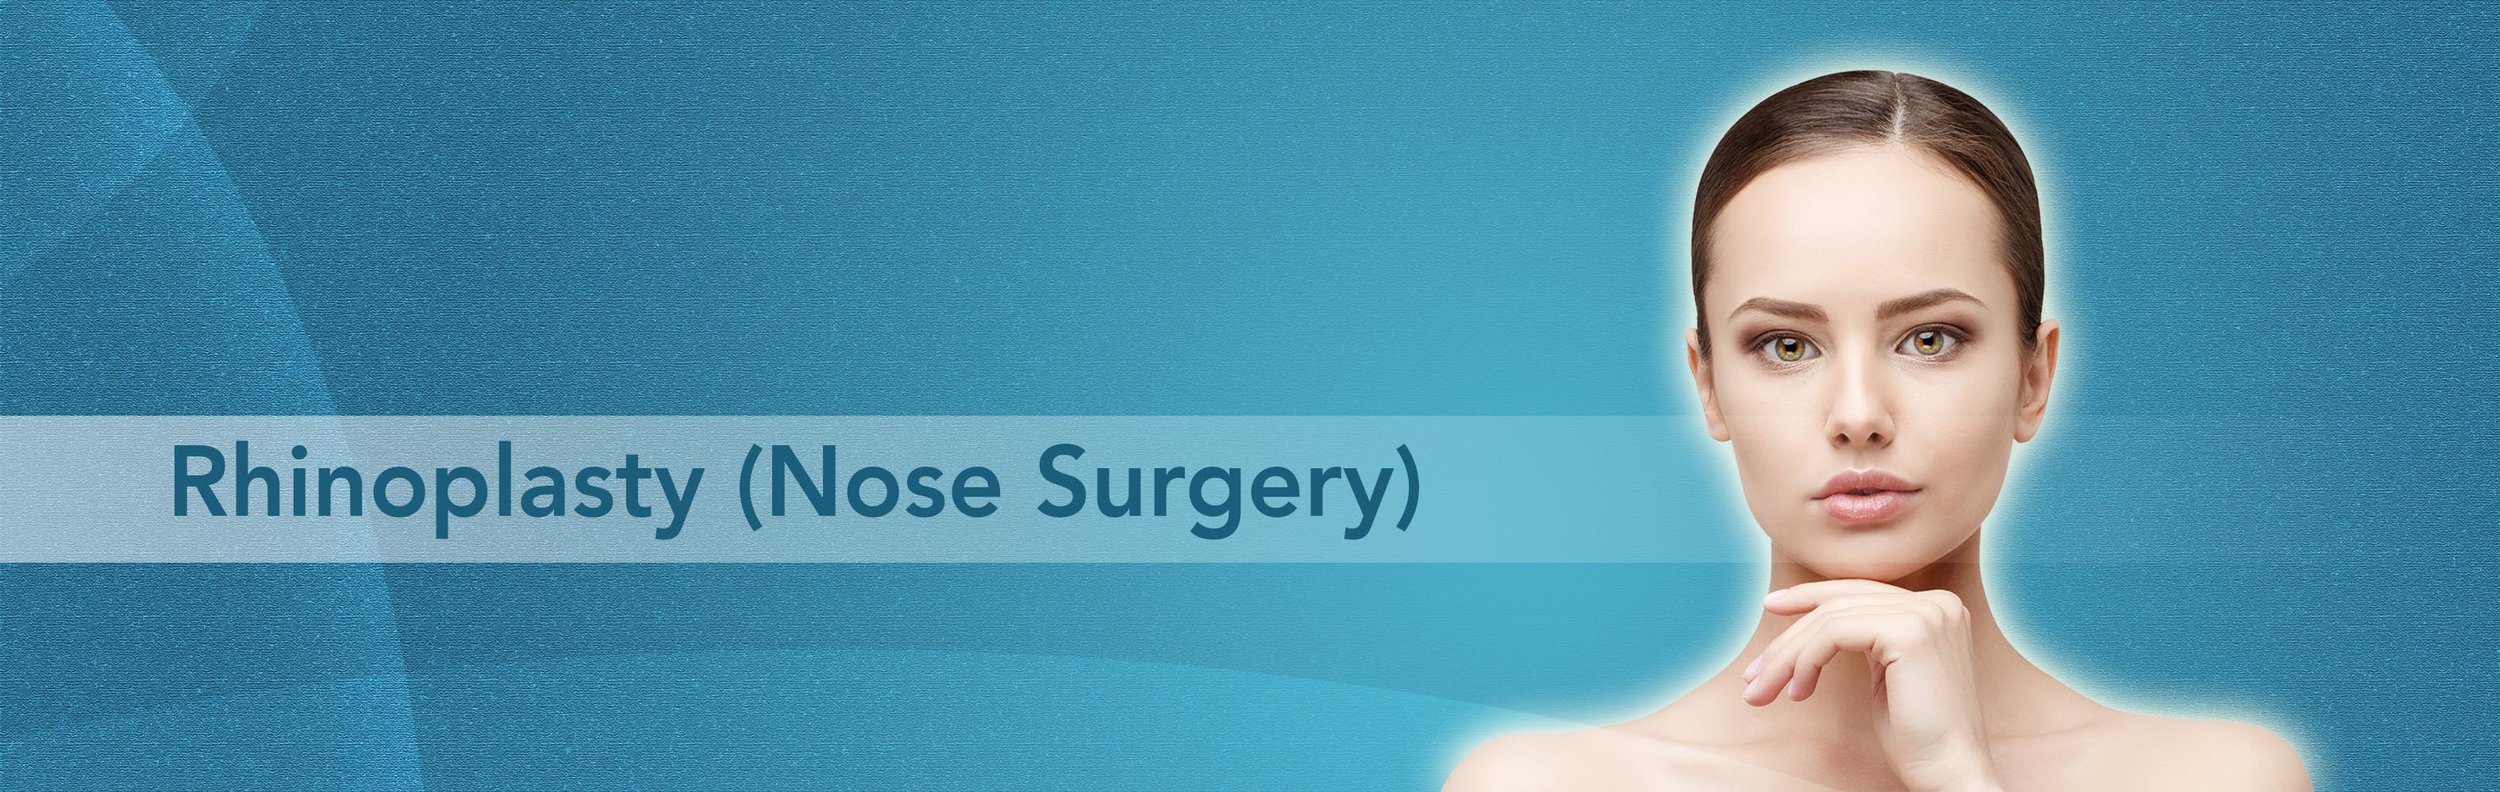 rhinoplasty-nose-surgery